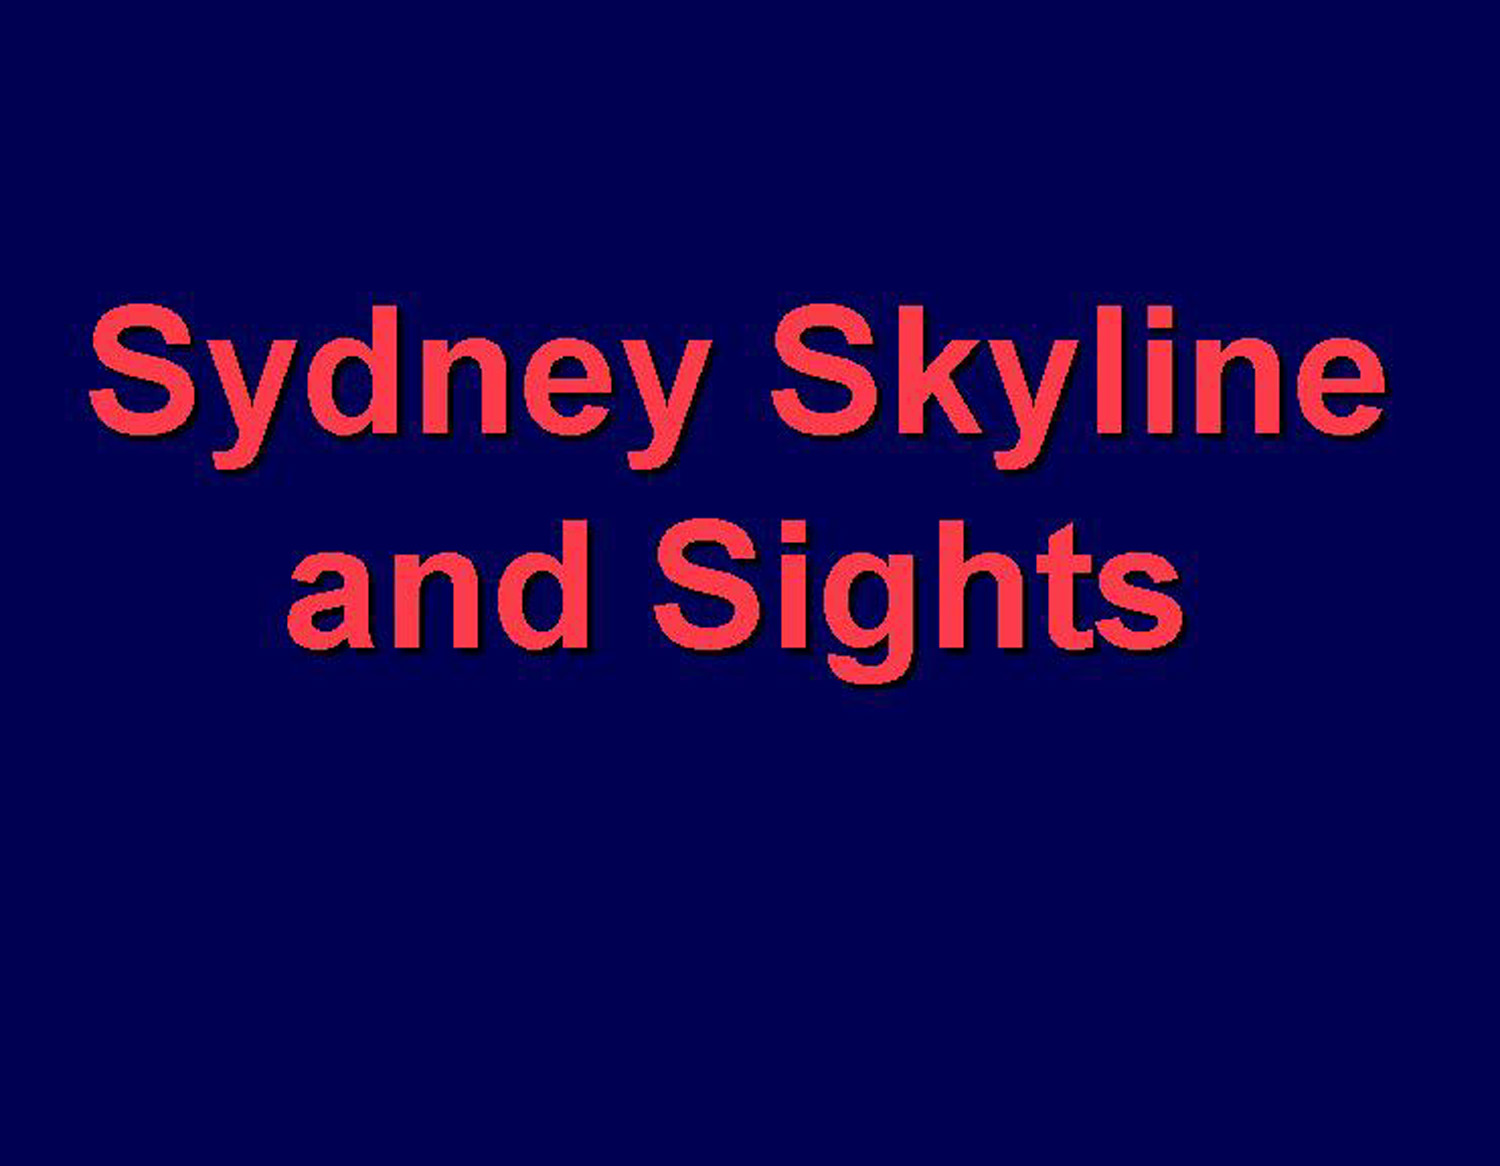 Eclipse 2012 - A04 - Title - Sydney Sights